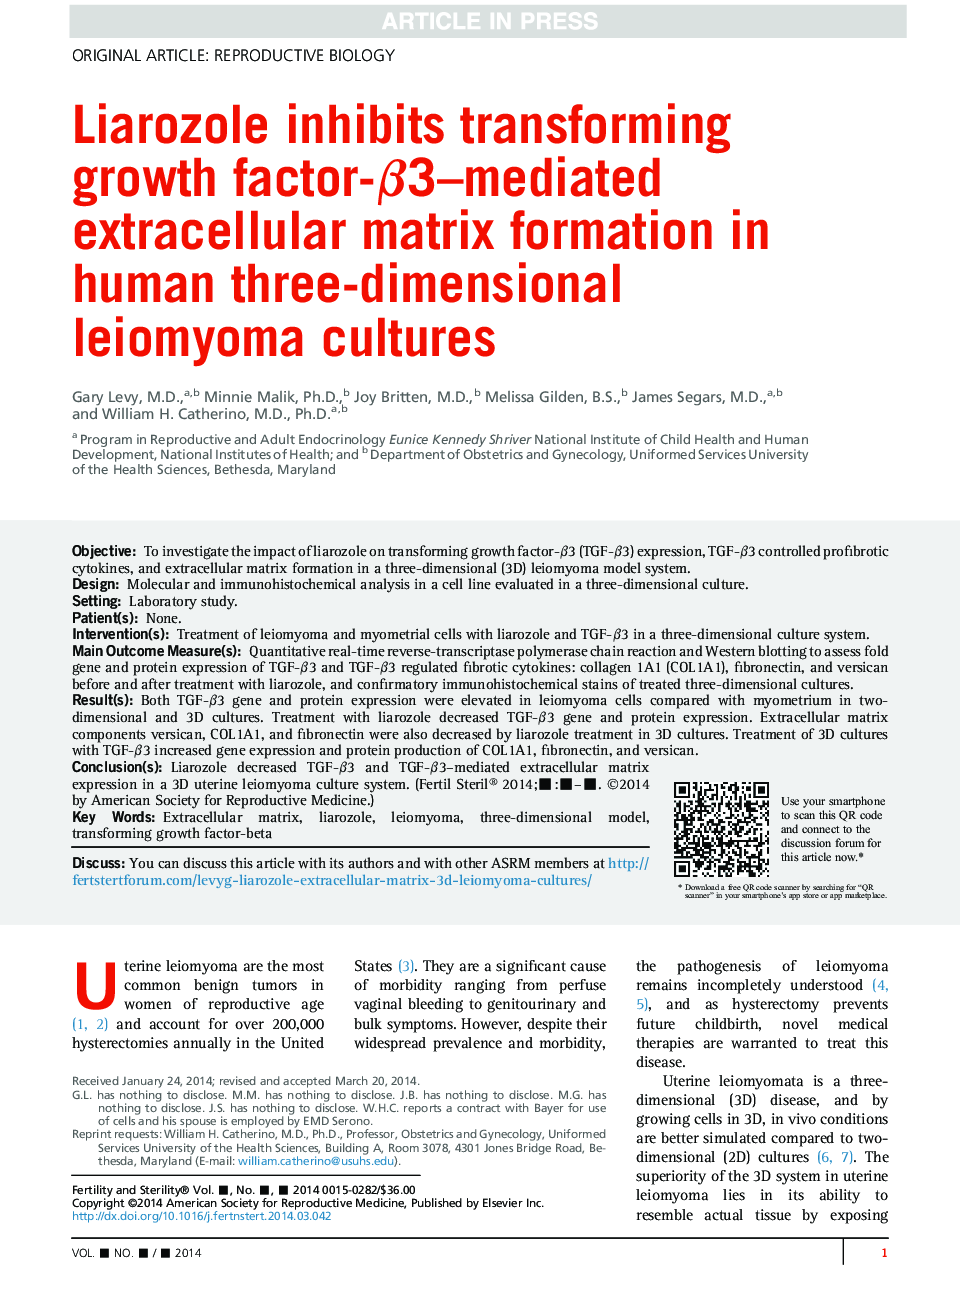 Liarozole inhibits transforming growth factor-Î²3-mediated extracellular matrix formation in human three-dimensional leiomyoma cultures